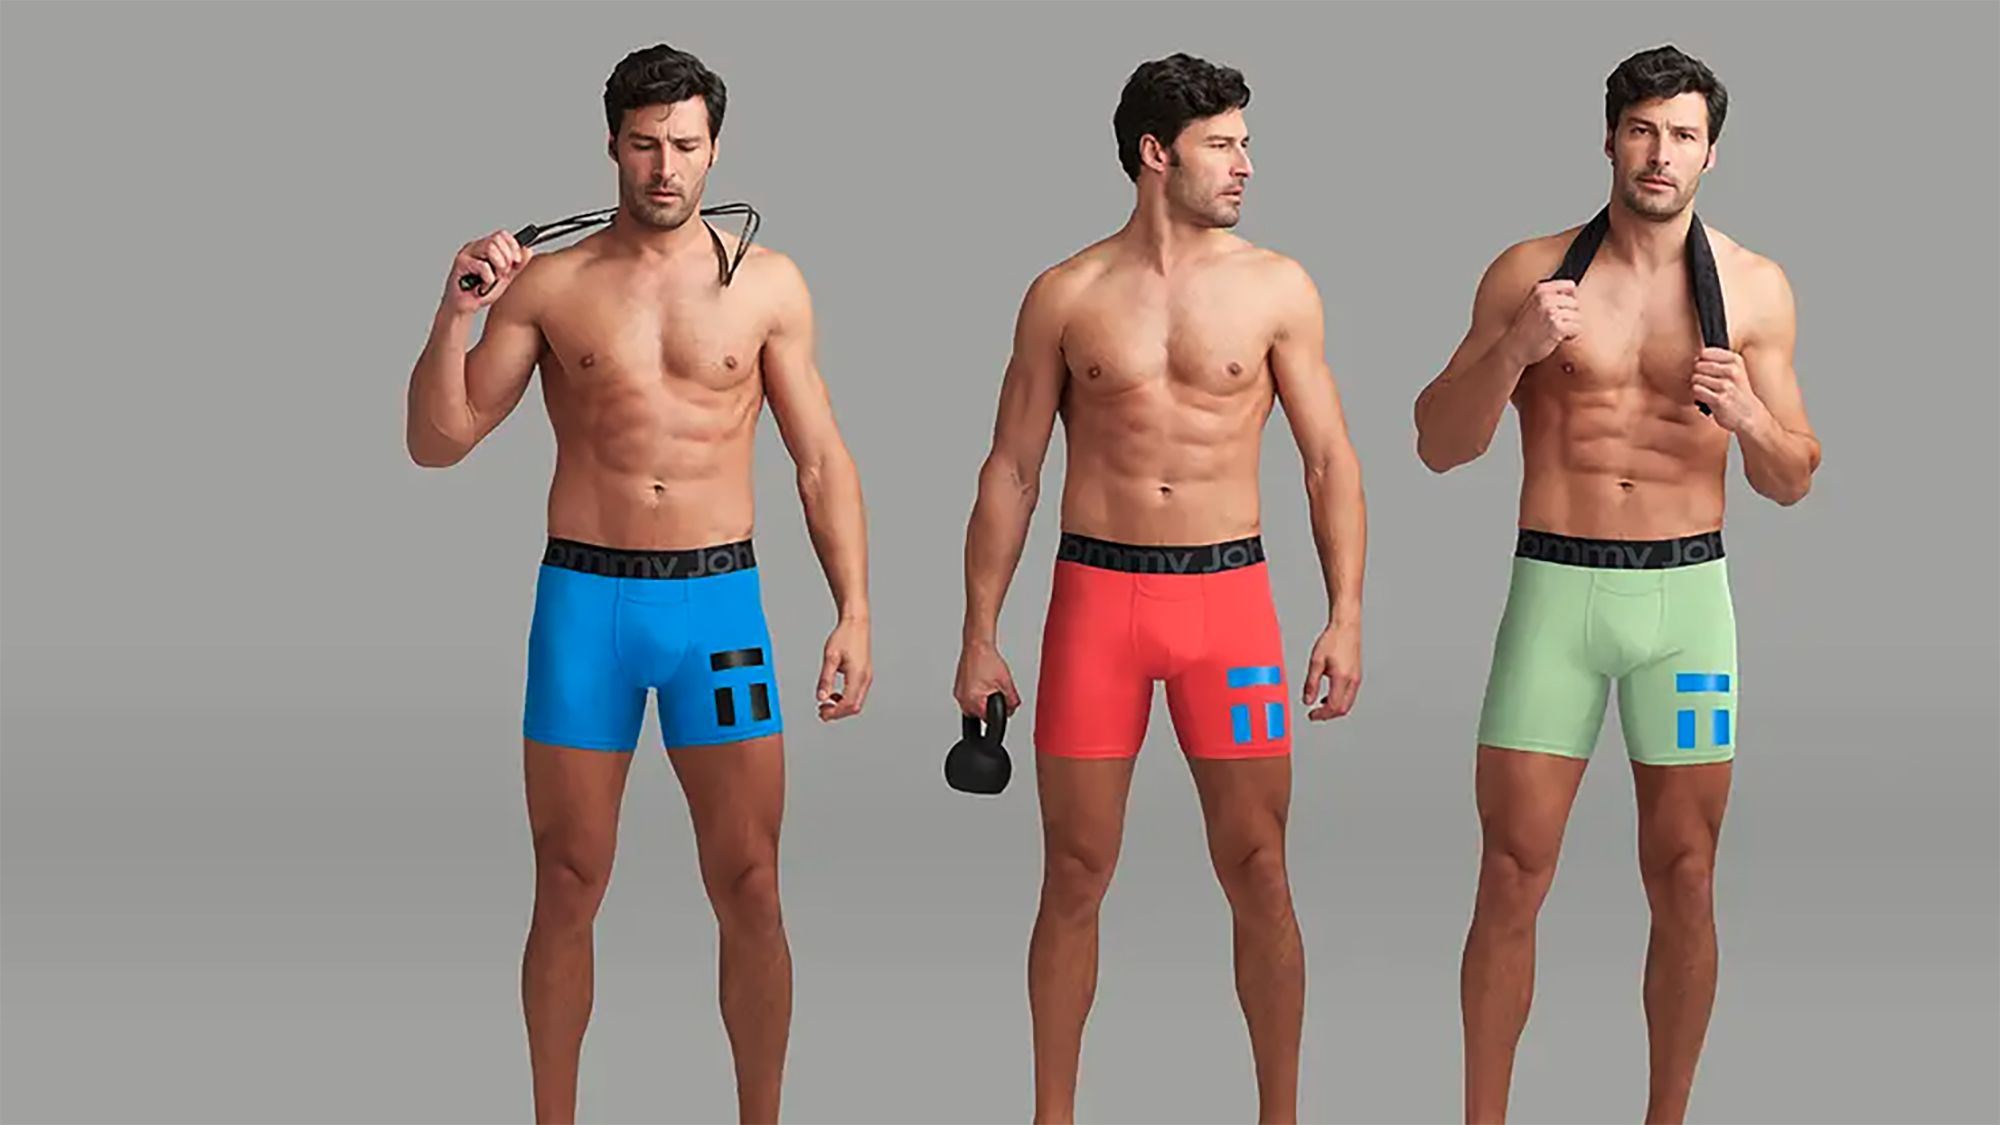 Tommy John Men's Underwear – 360 Sport Boxer Briefs with Contour